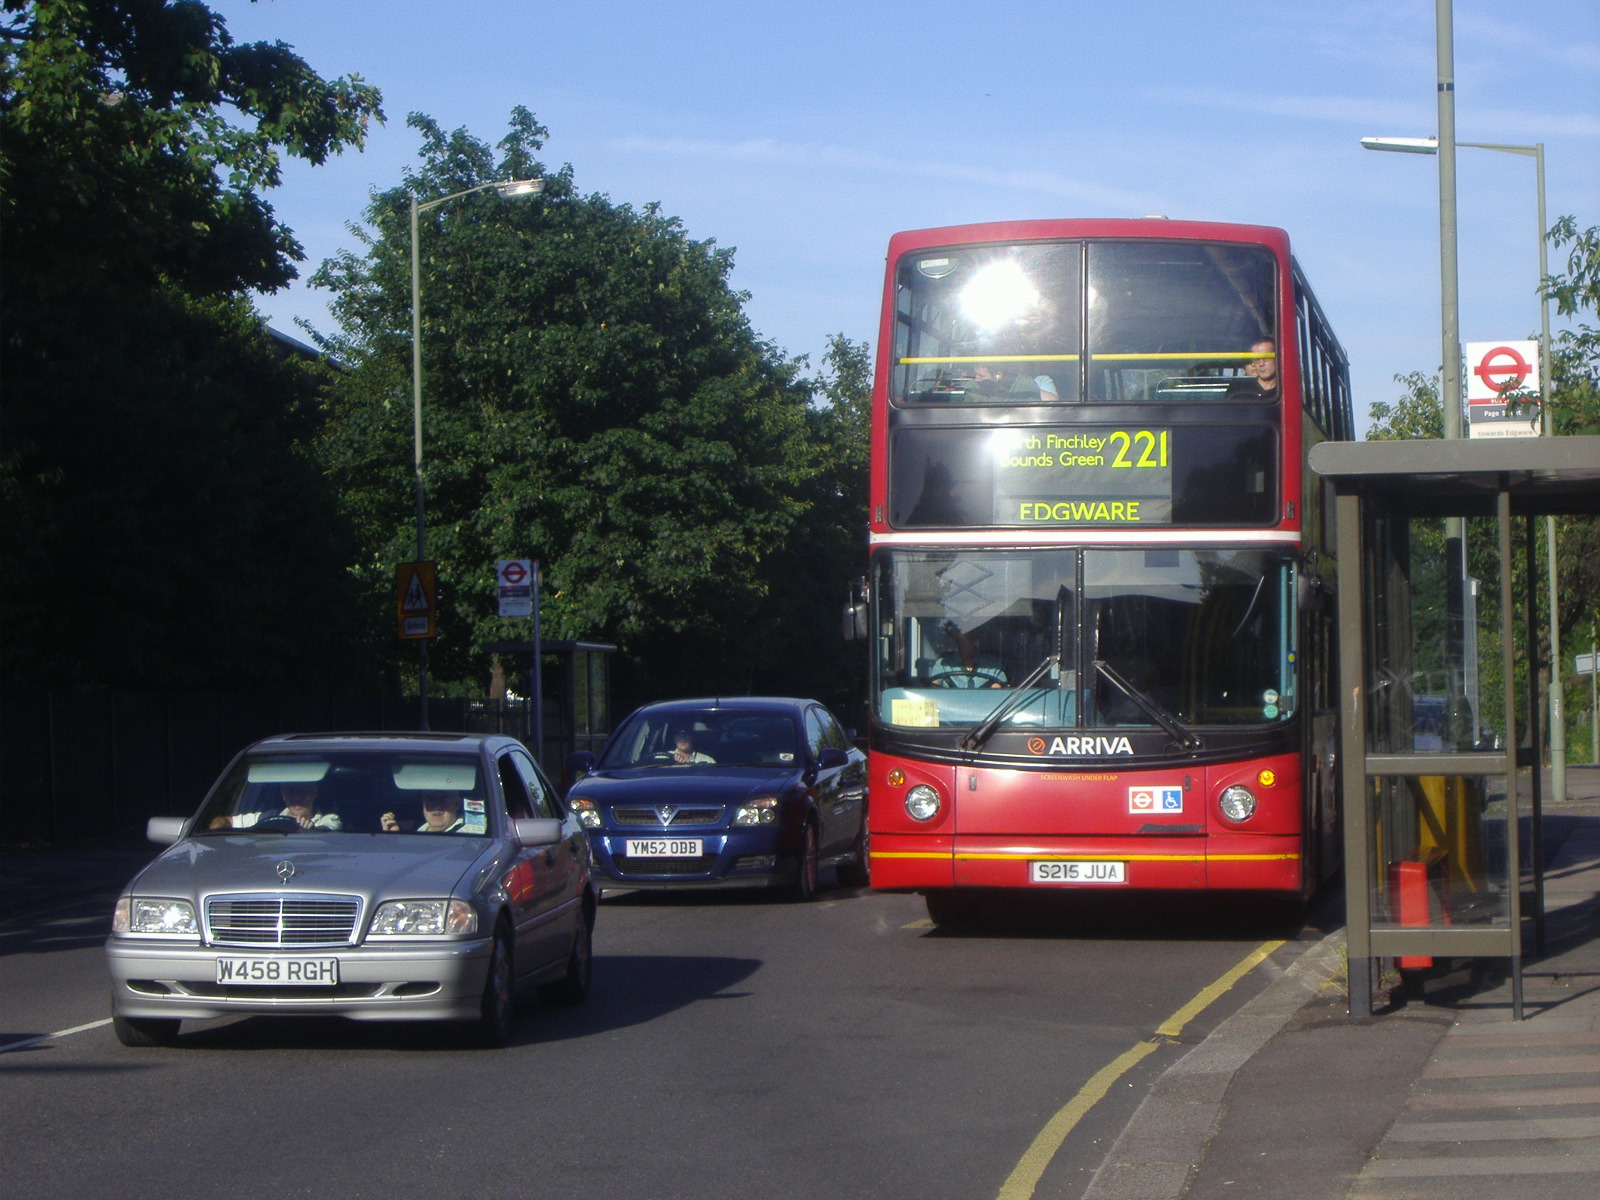 London bus 221